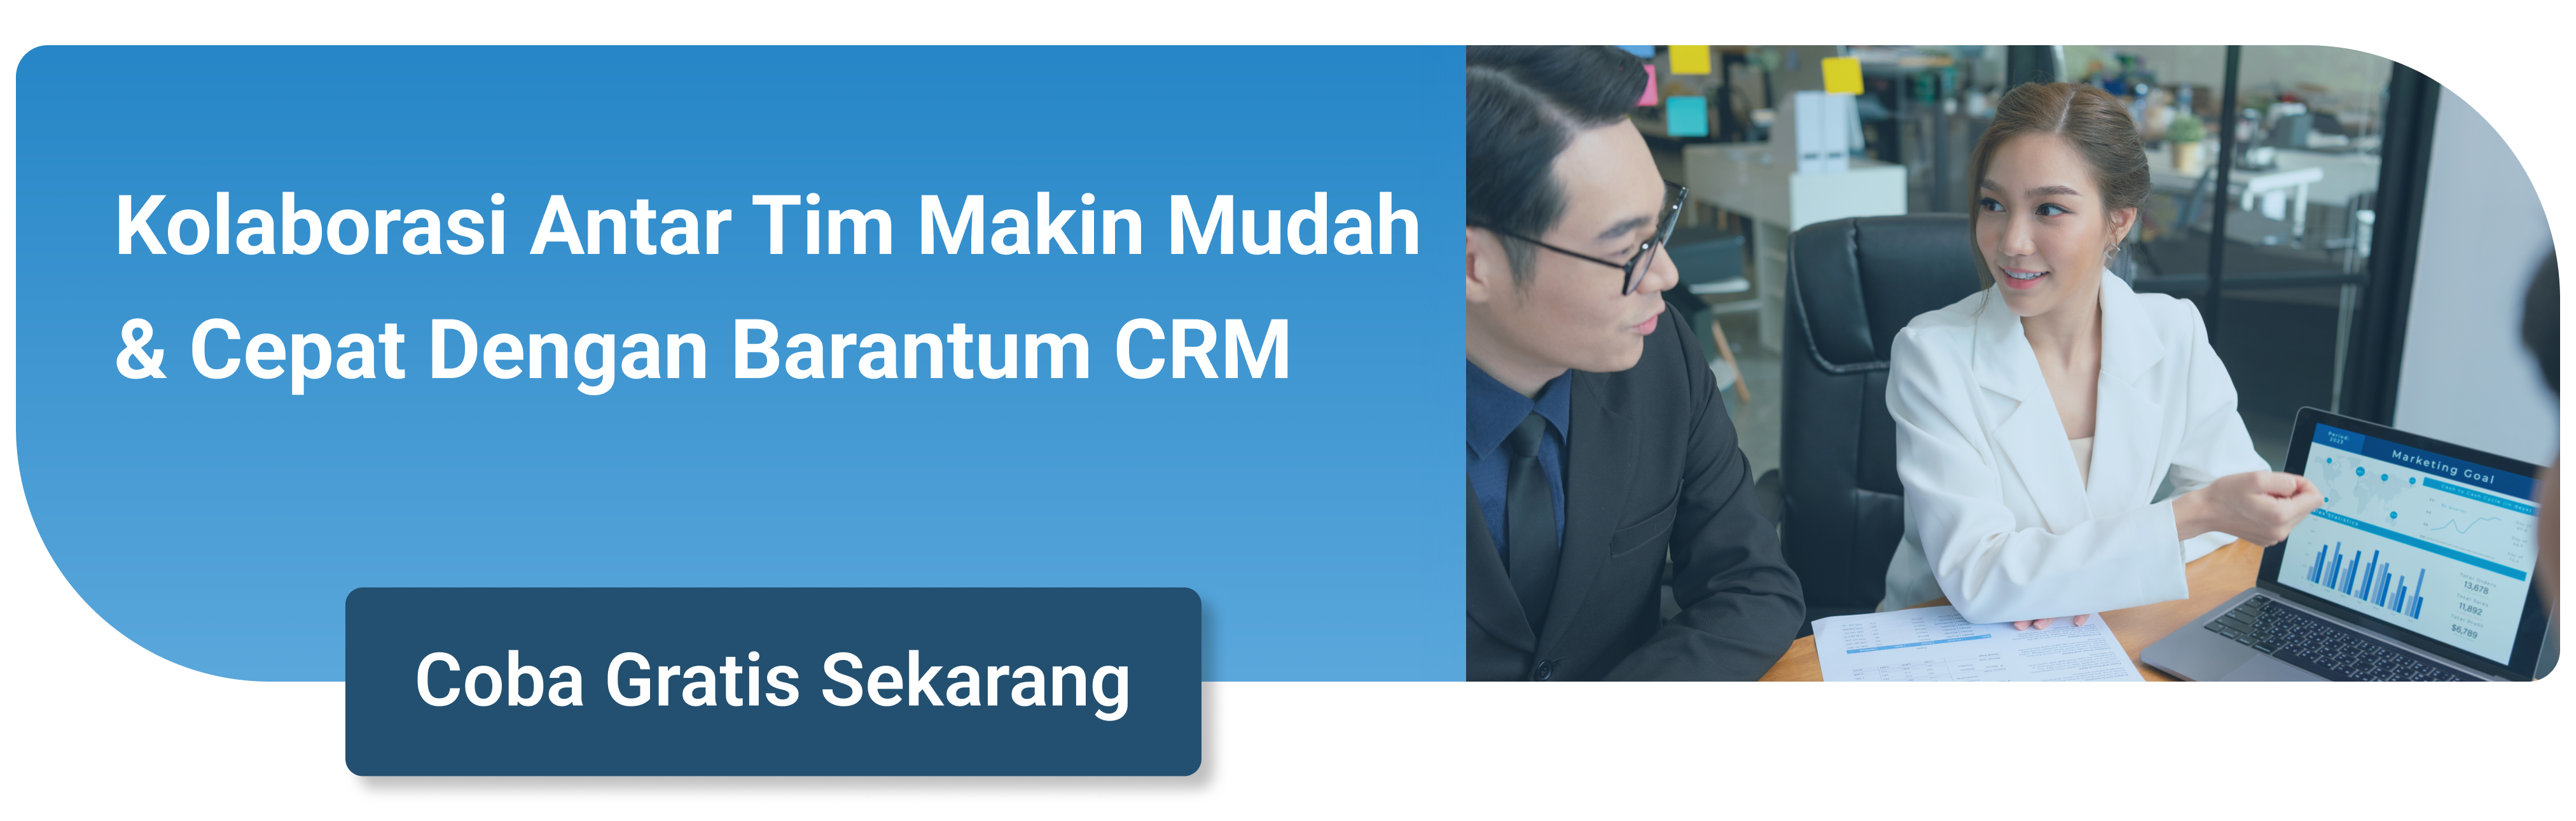 collaborative crm - Barantum CRM terbaik Indonesia